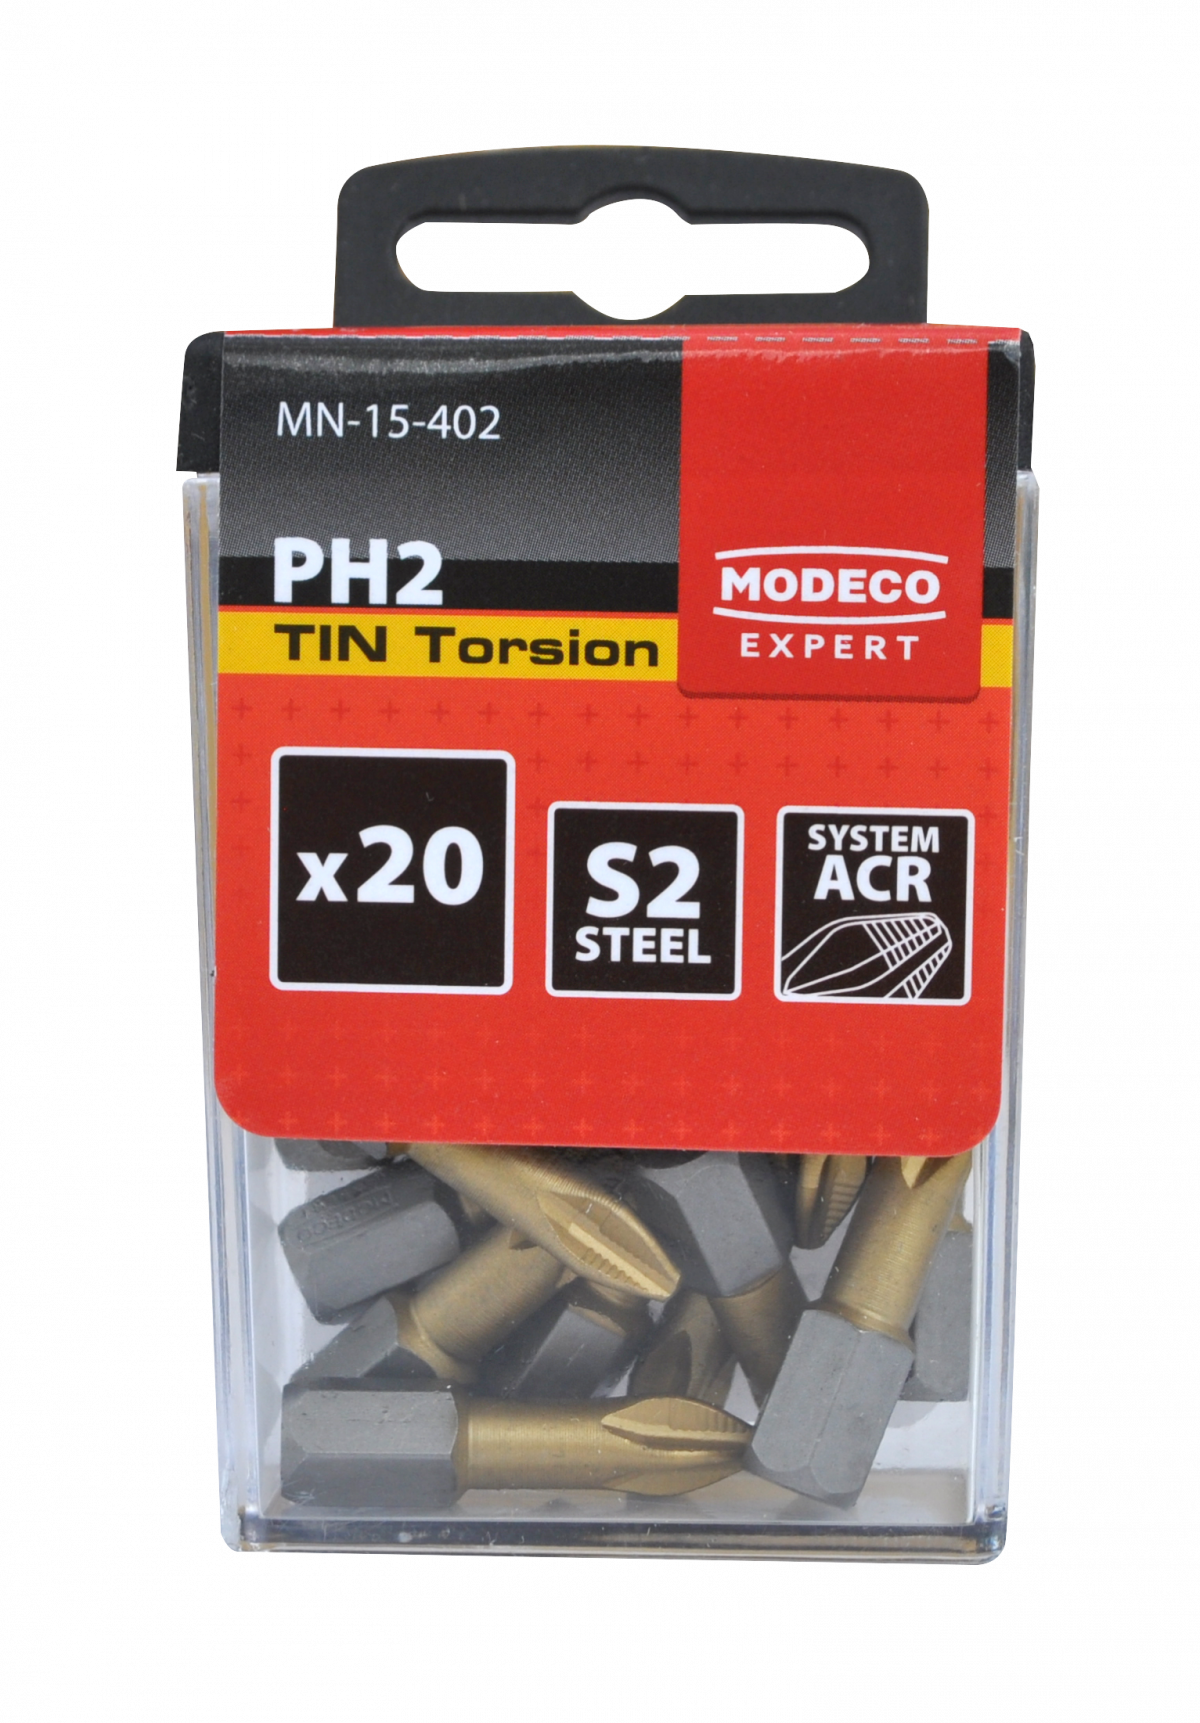 MN-15-402 25 mm PH TiN Torsion bits